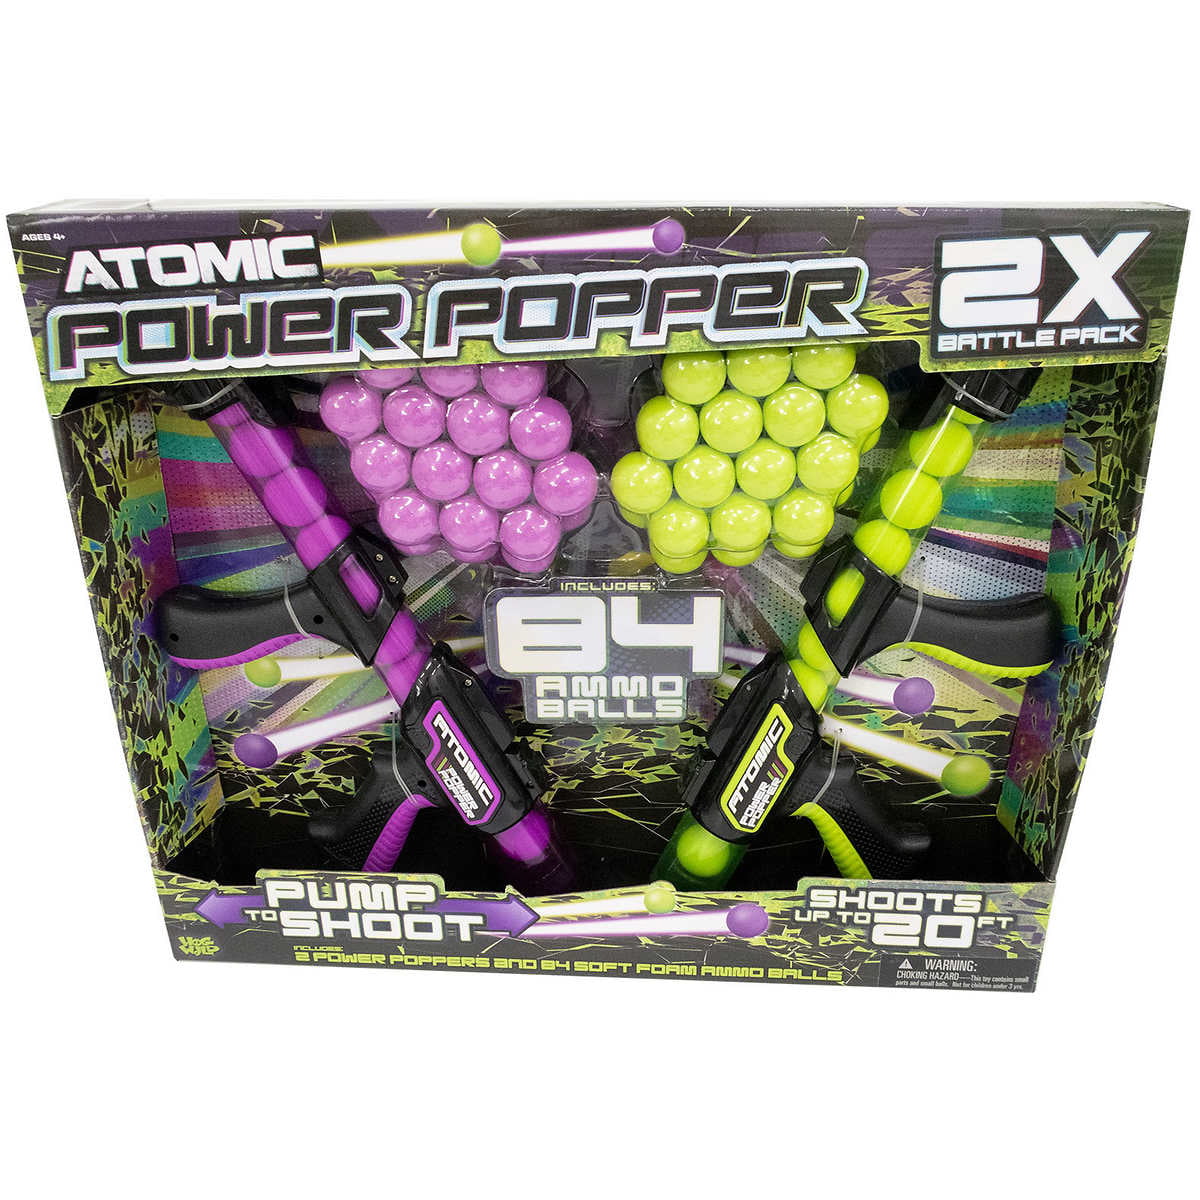 Hog Wild 2 X Atomic Power Popper Battle Pack With 84 Balls for sale online 